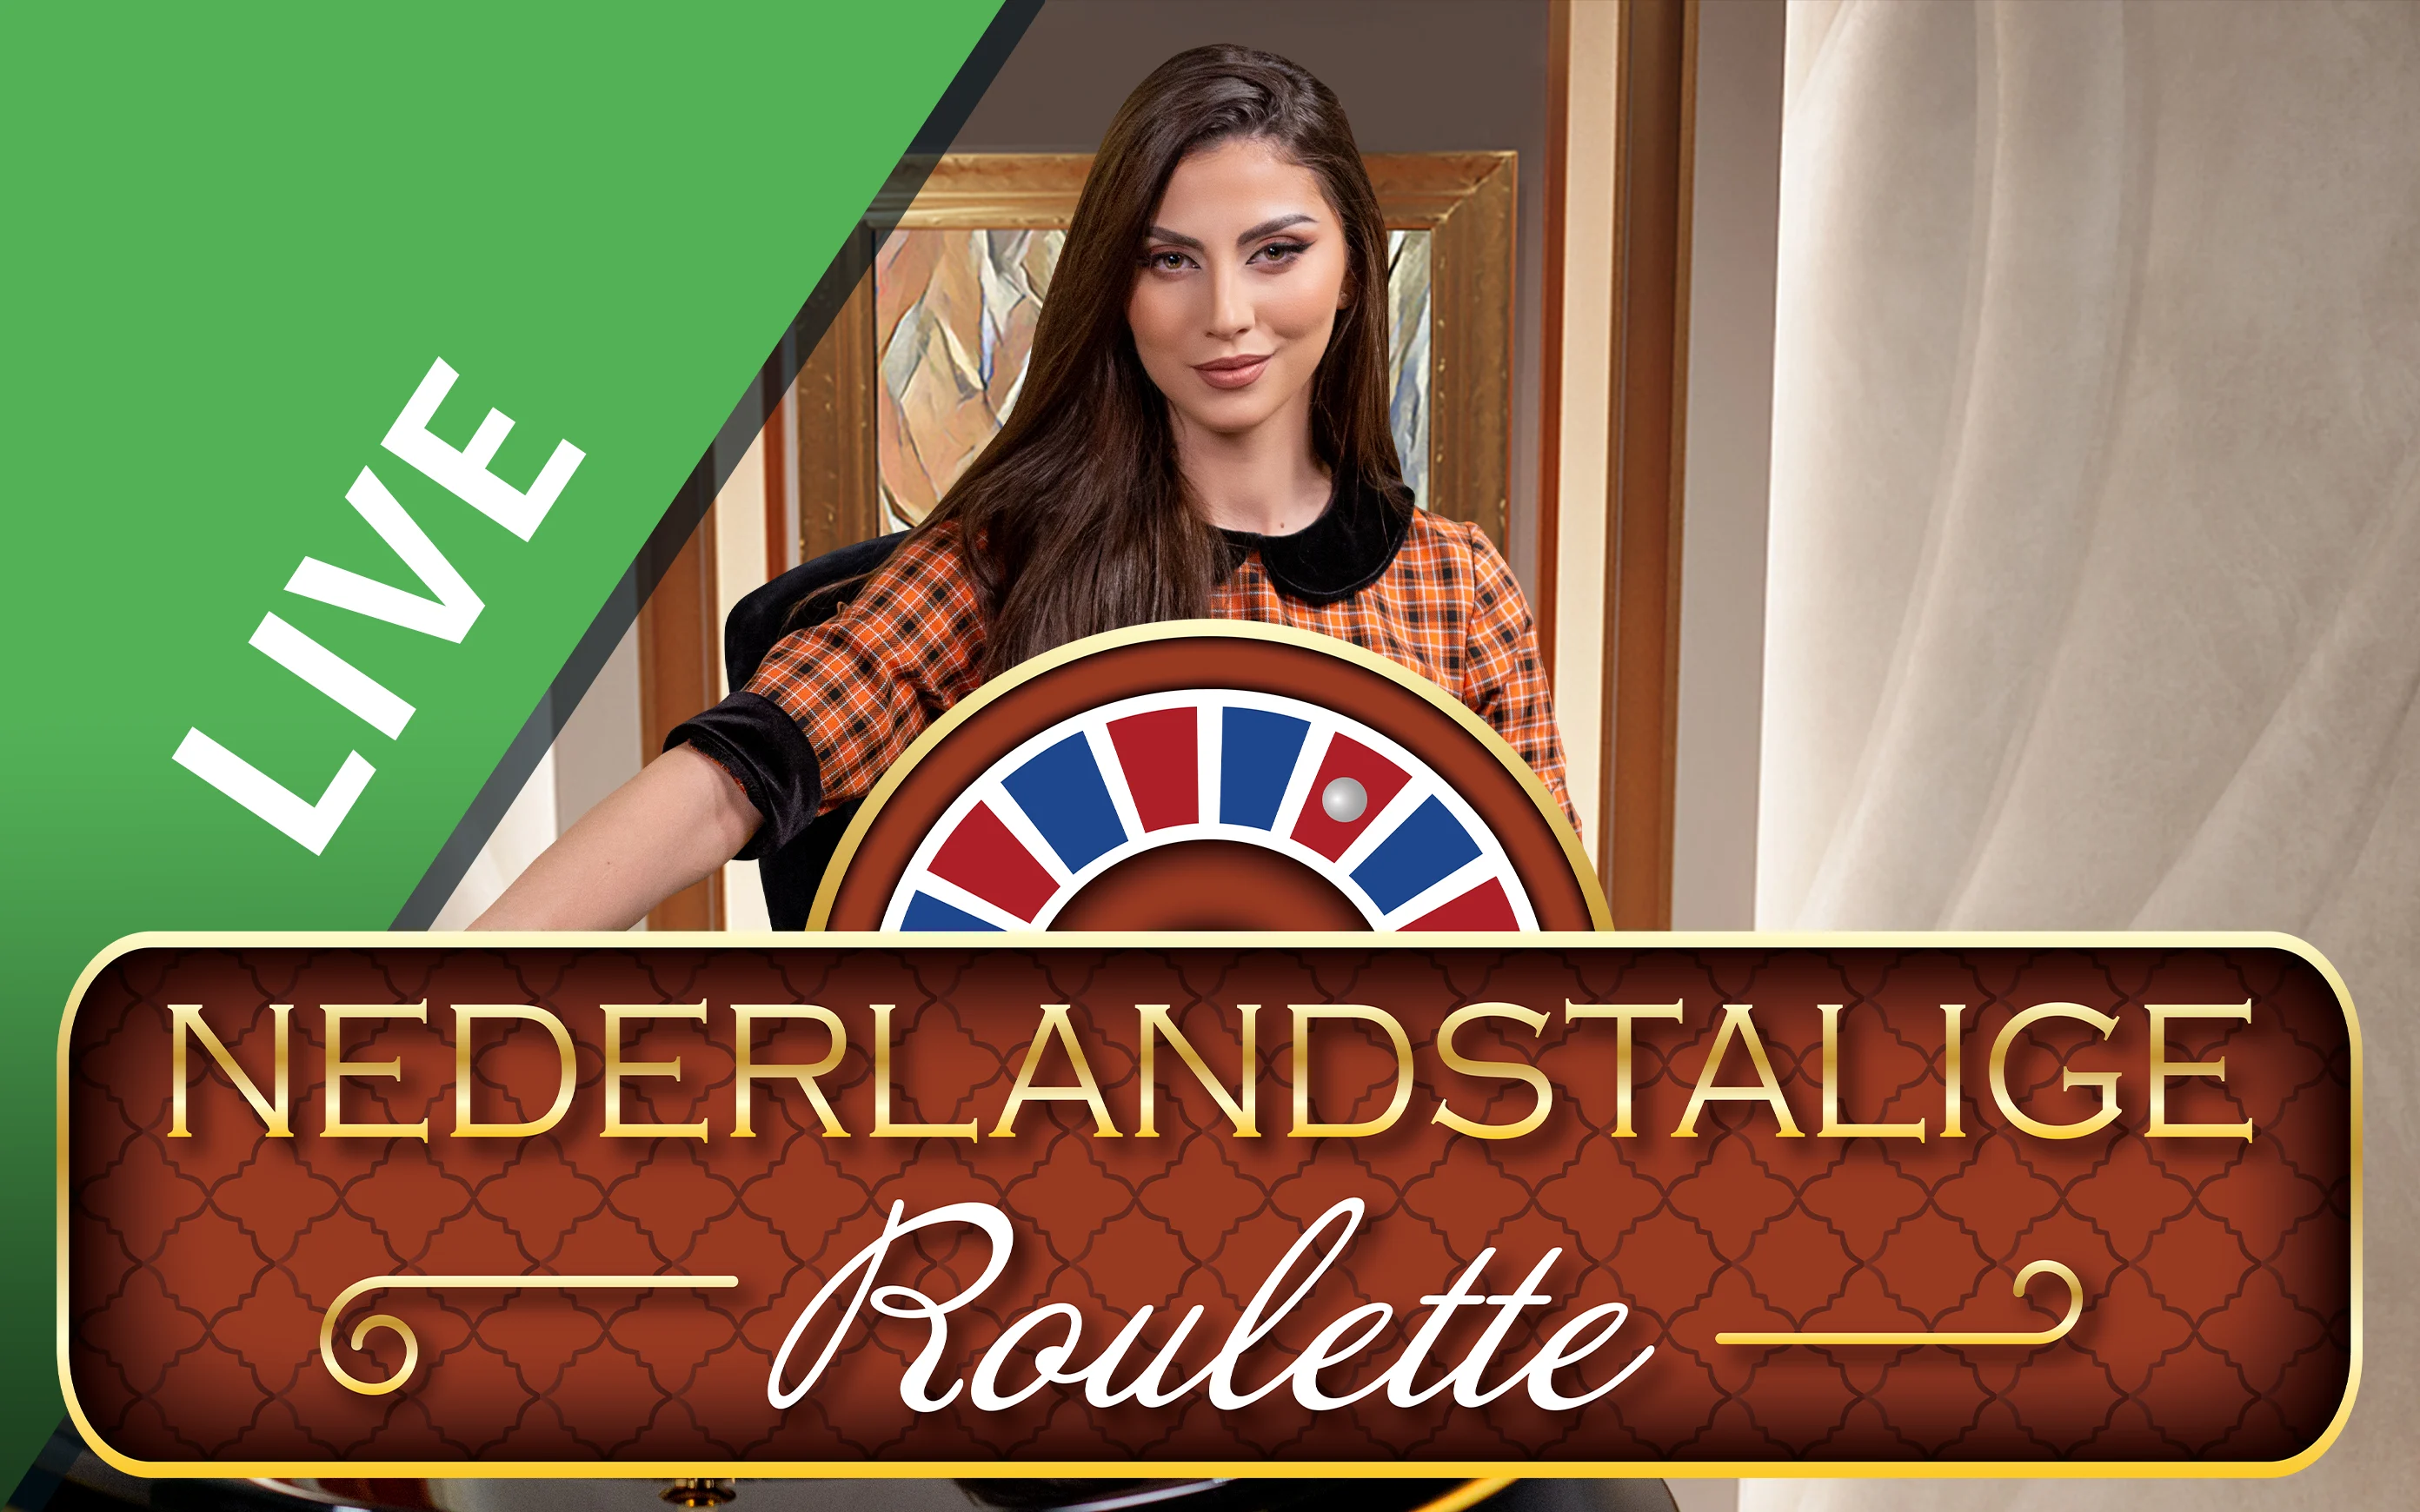 Speel Nederlandstalige Roulette op Starcasino.be online casino